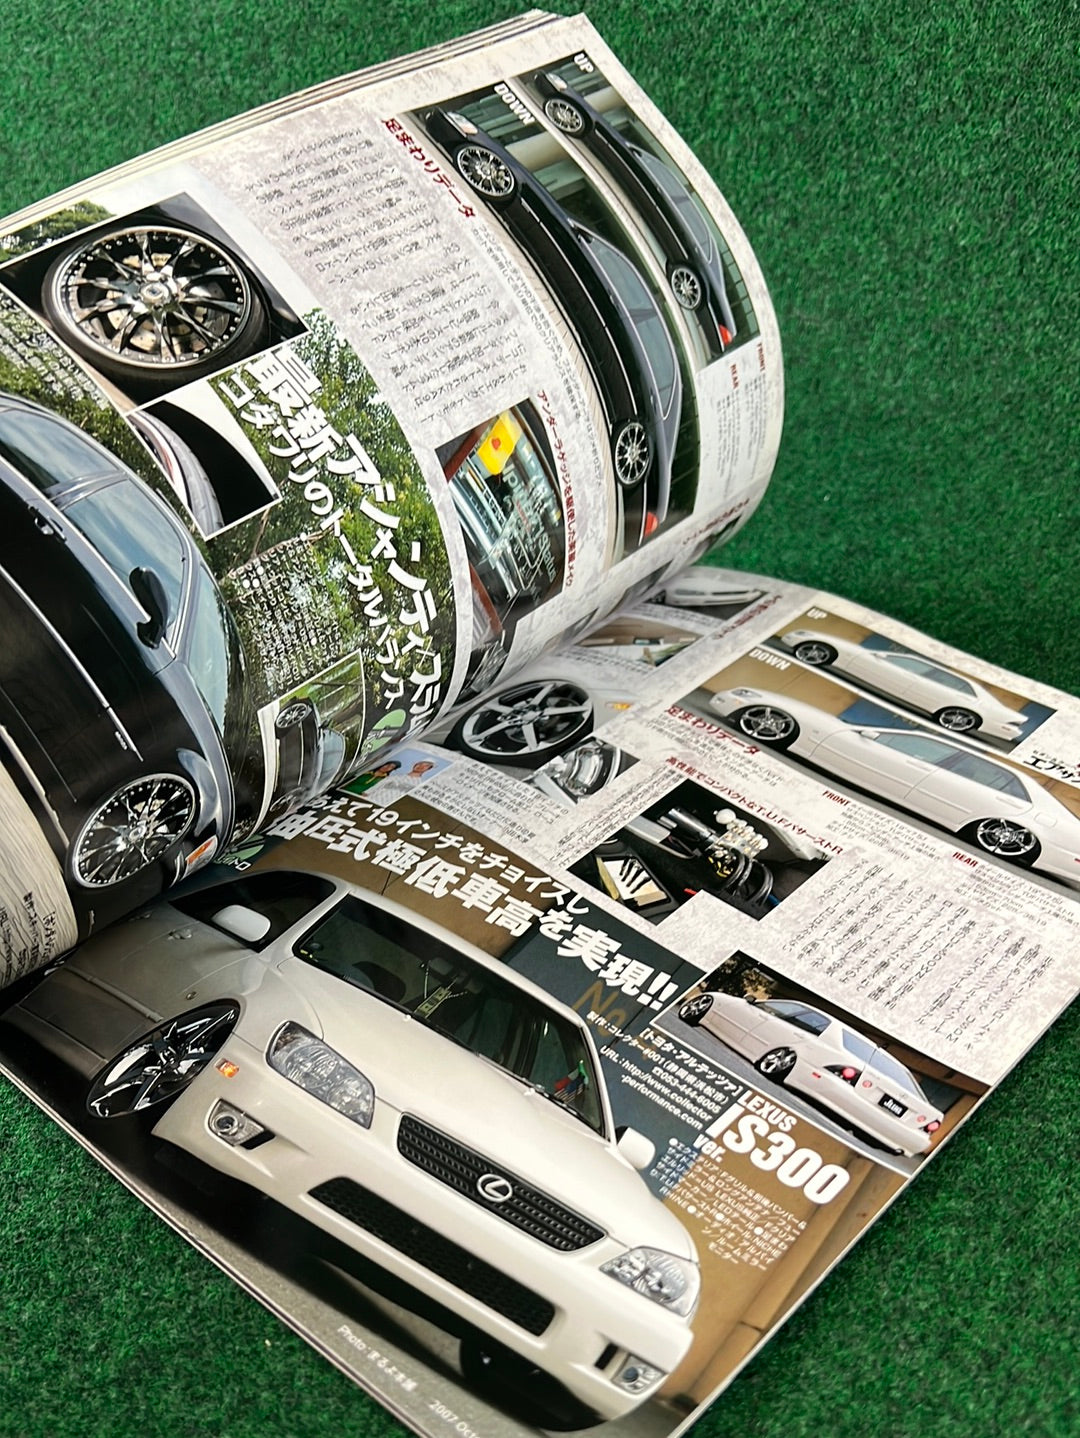 J-LUG Car Magazine - 2007 Issue 10 & 11